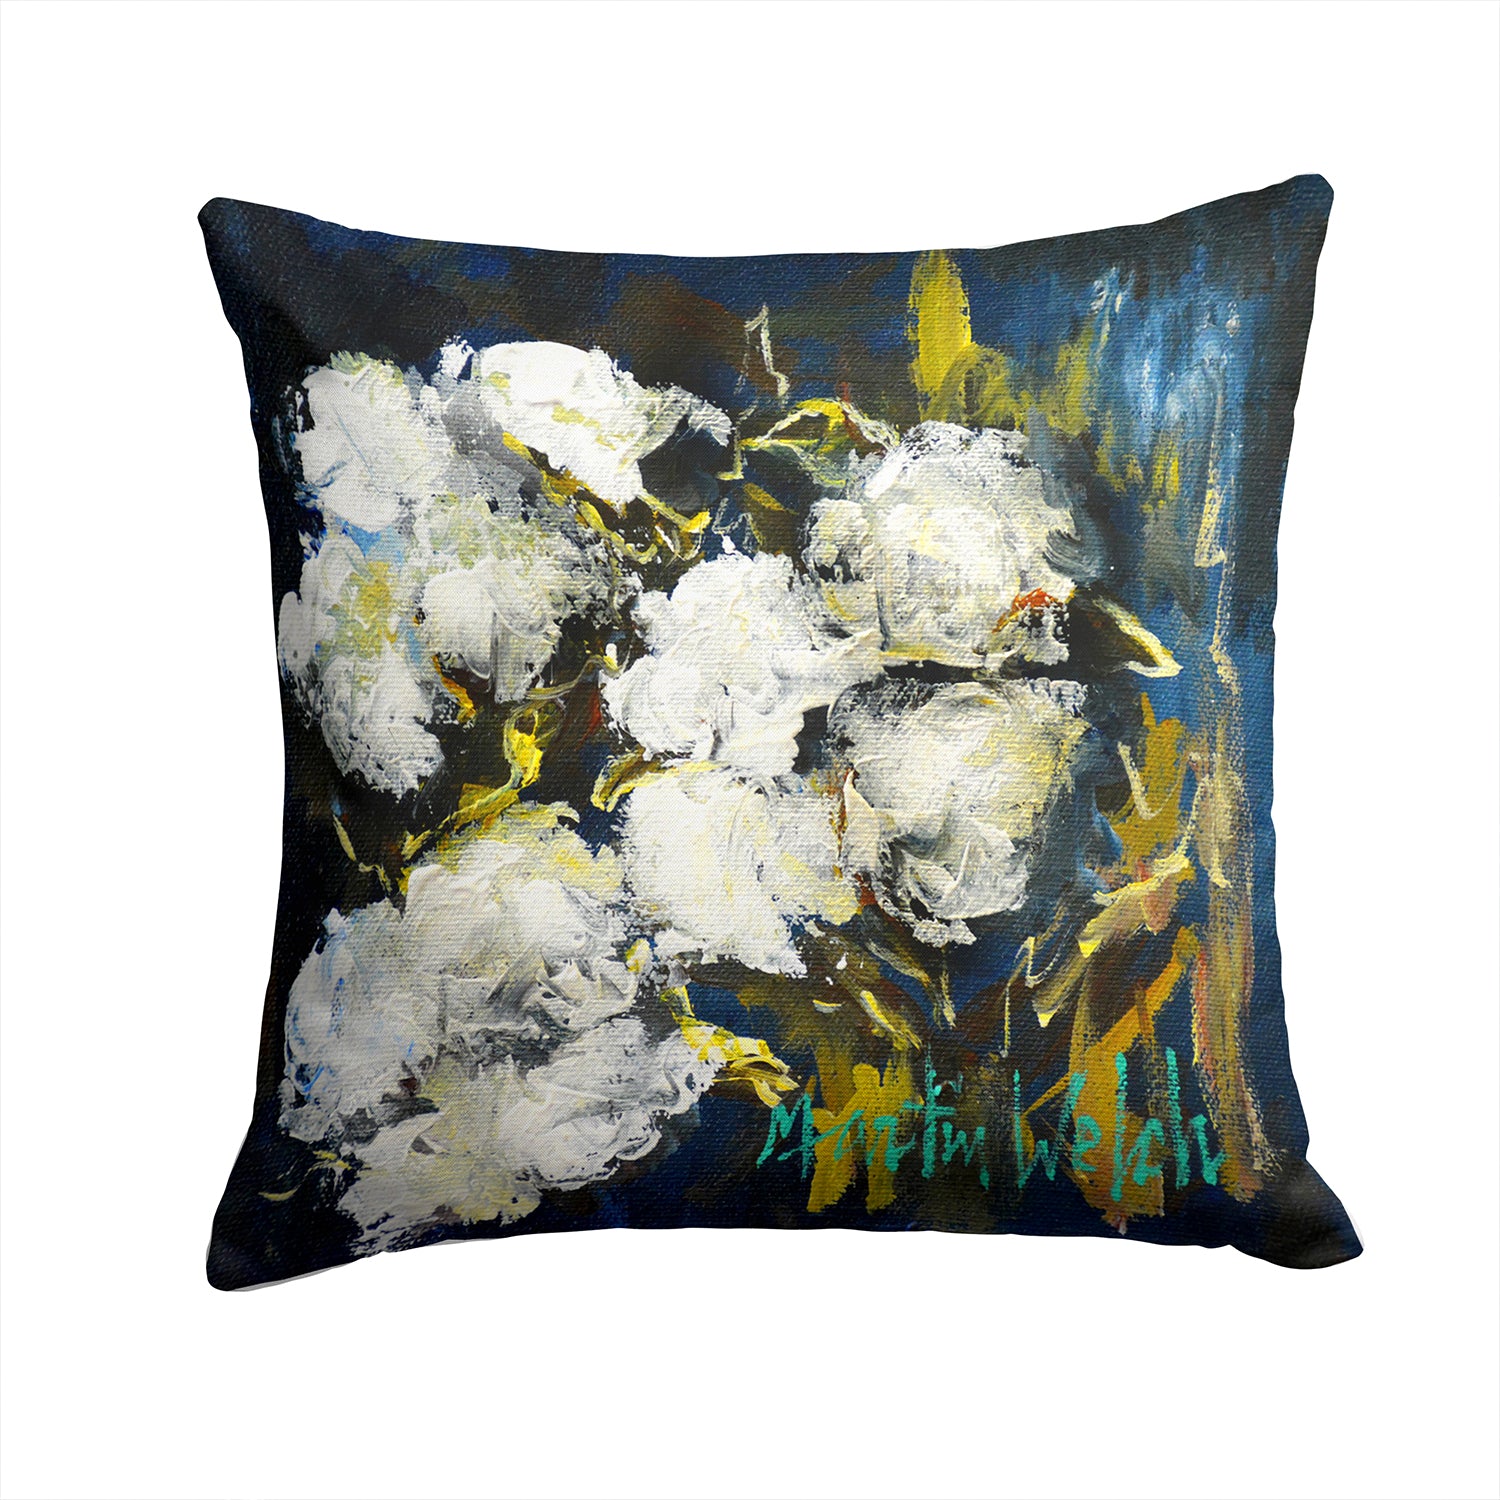 Buy this Three Boll Cotton Fabric Decorative Pillow